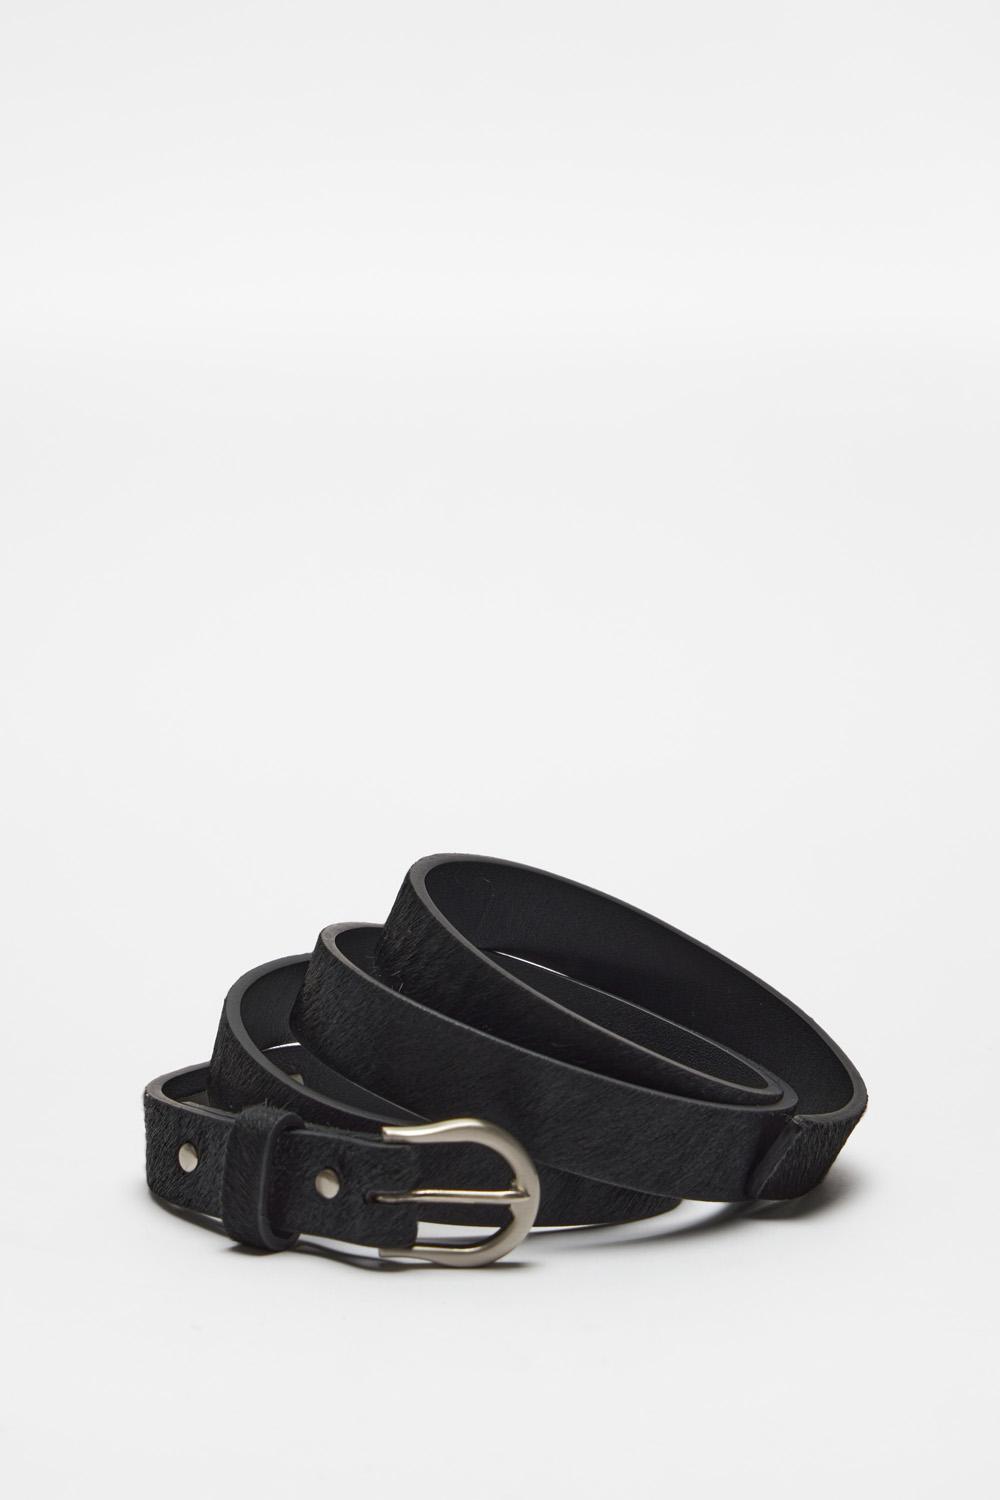 Long Leather Belt (M) - Black Calf Hair